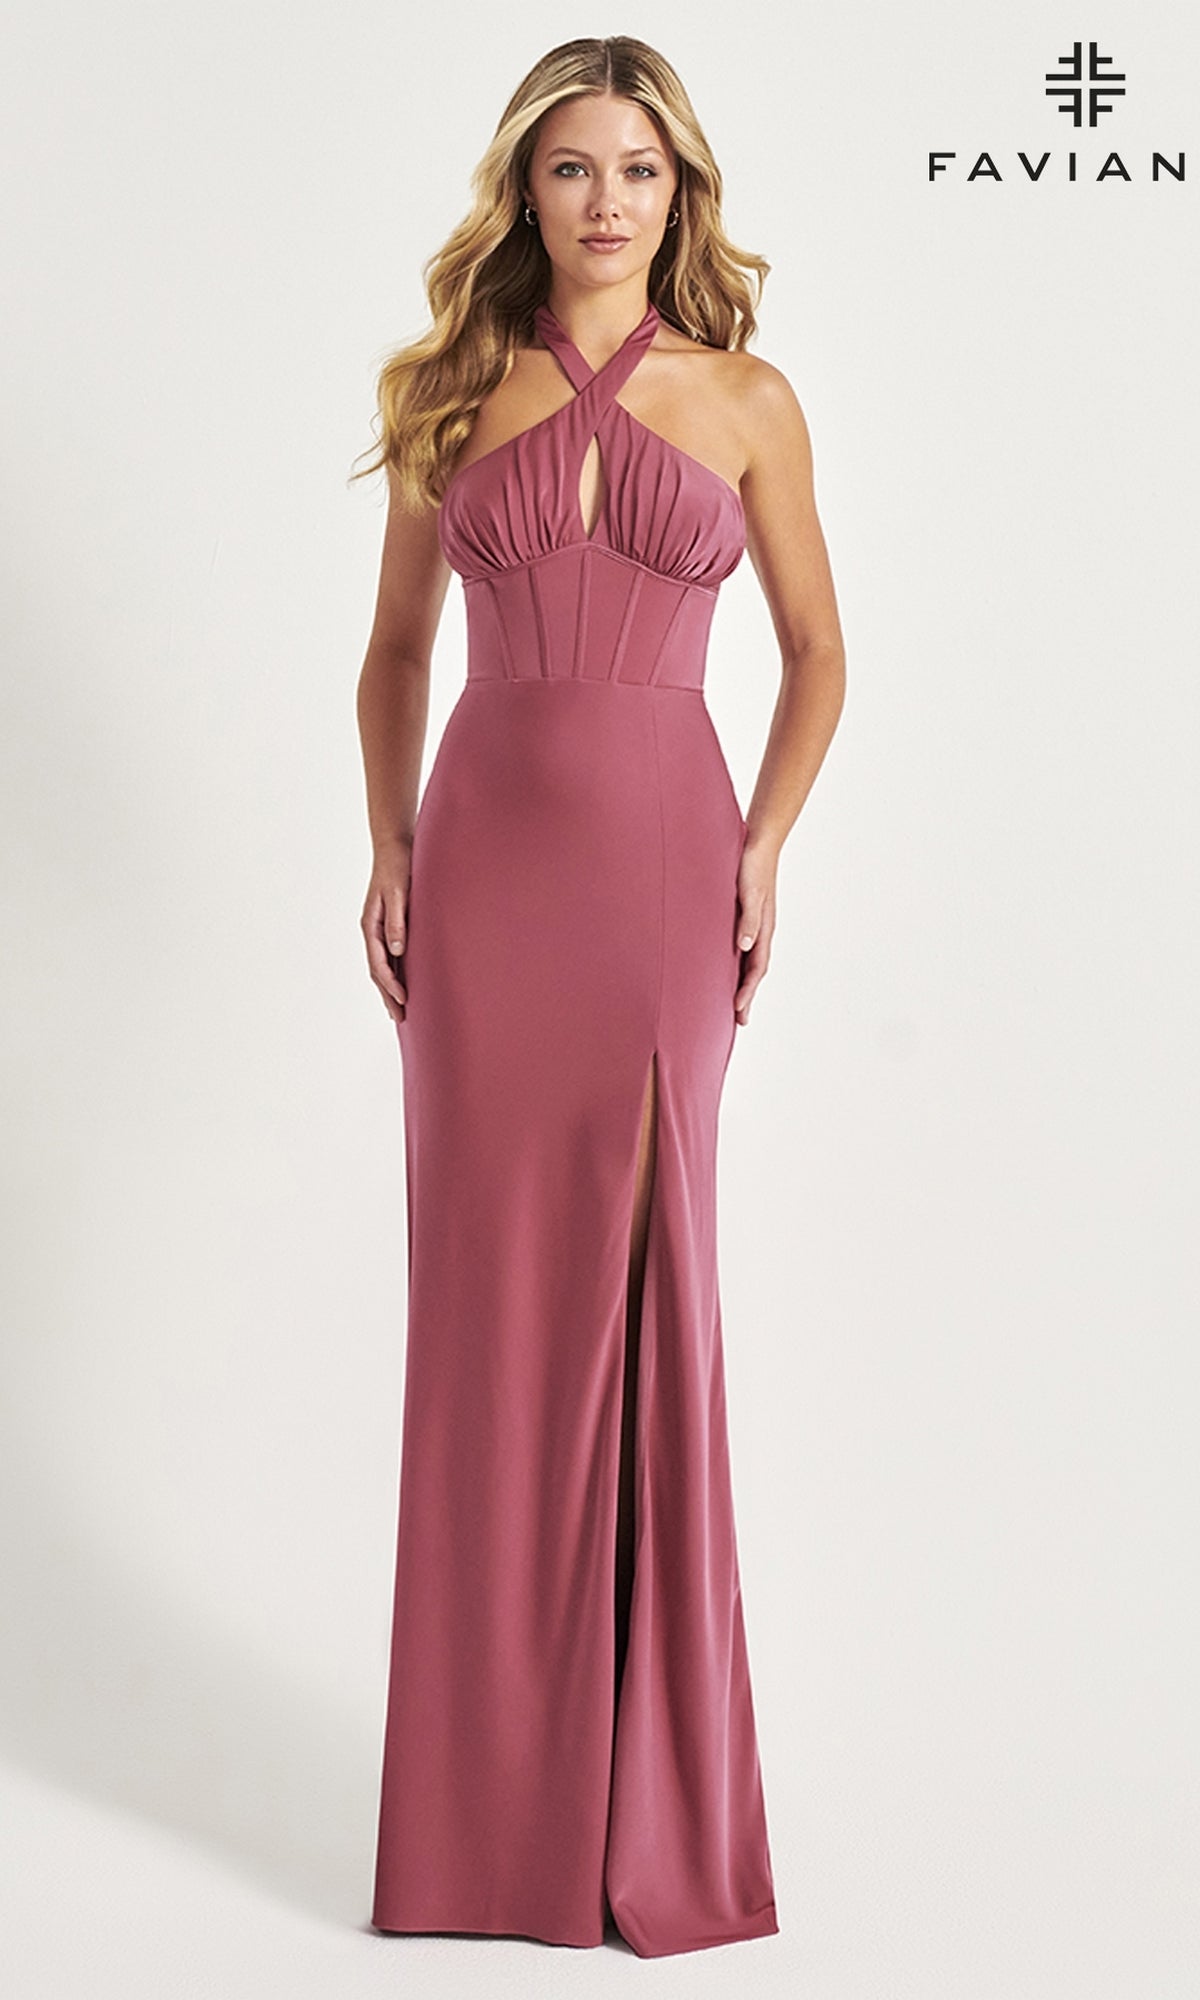 Rose Long Formal Dress 11065 by Faviana